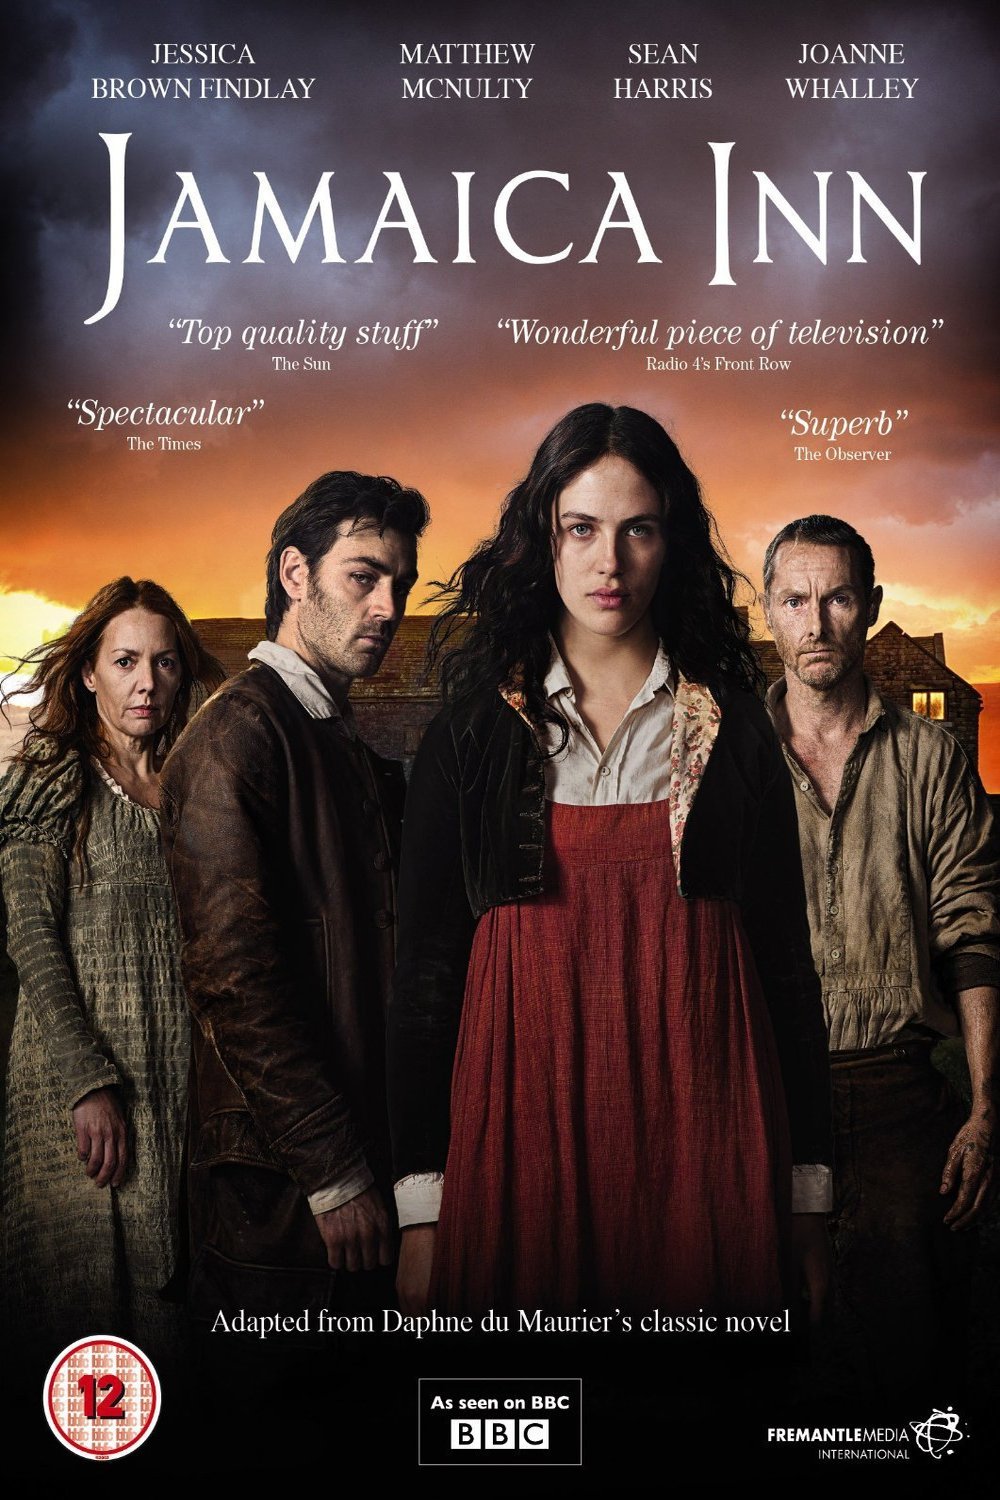 Poster of the movie Jamaica Inn